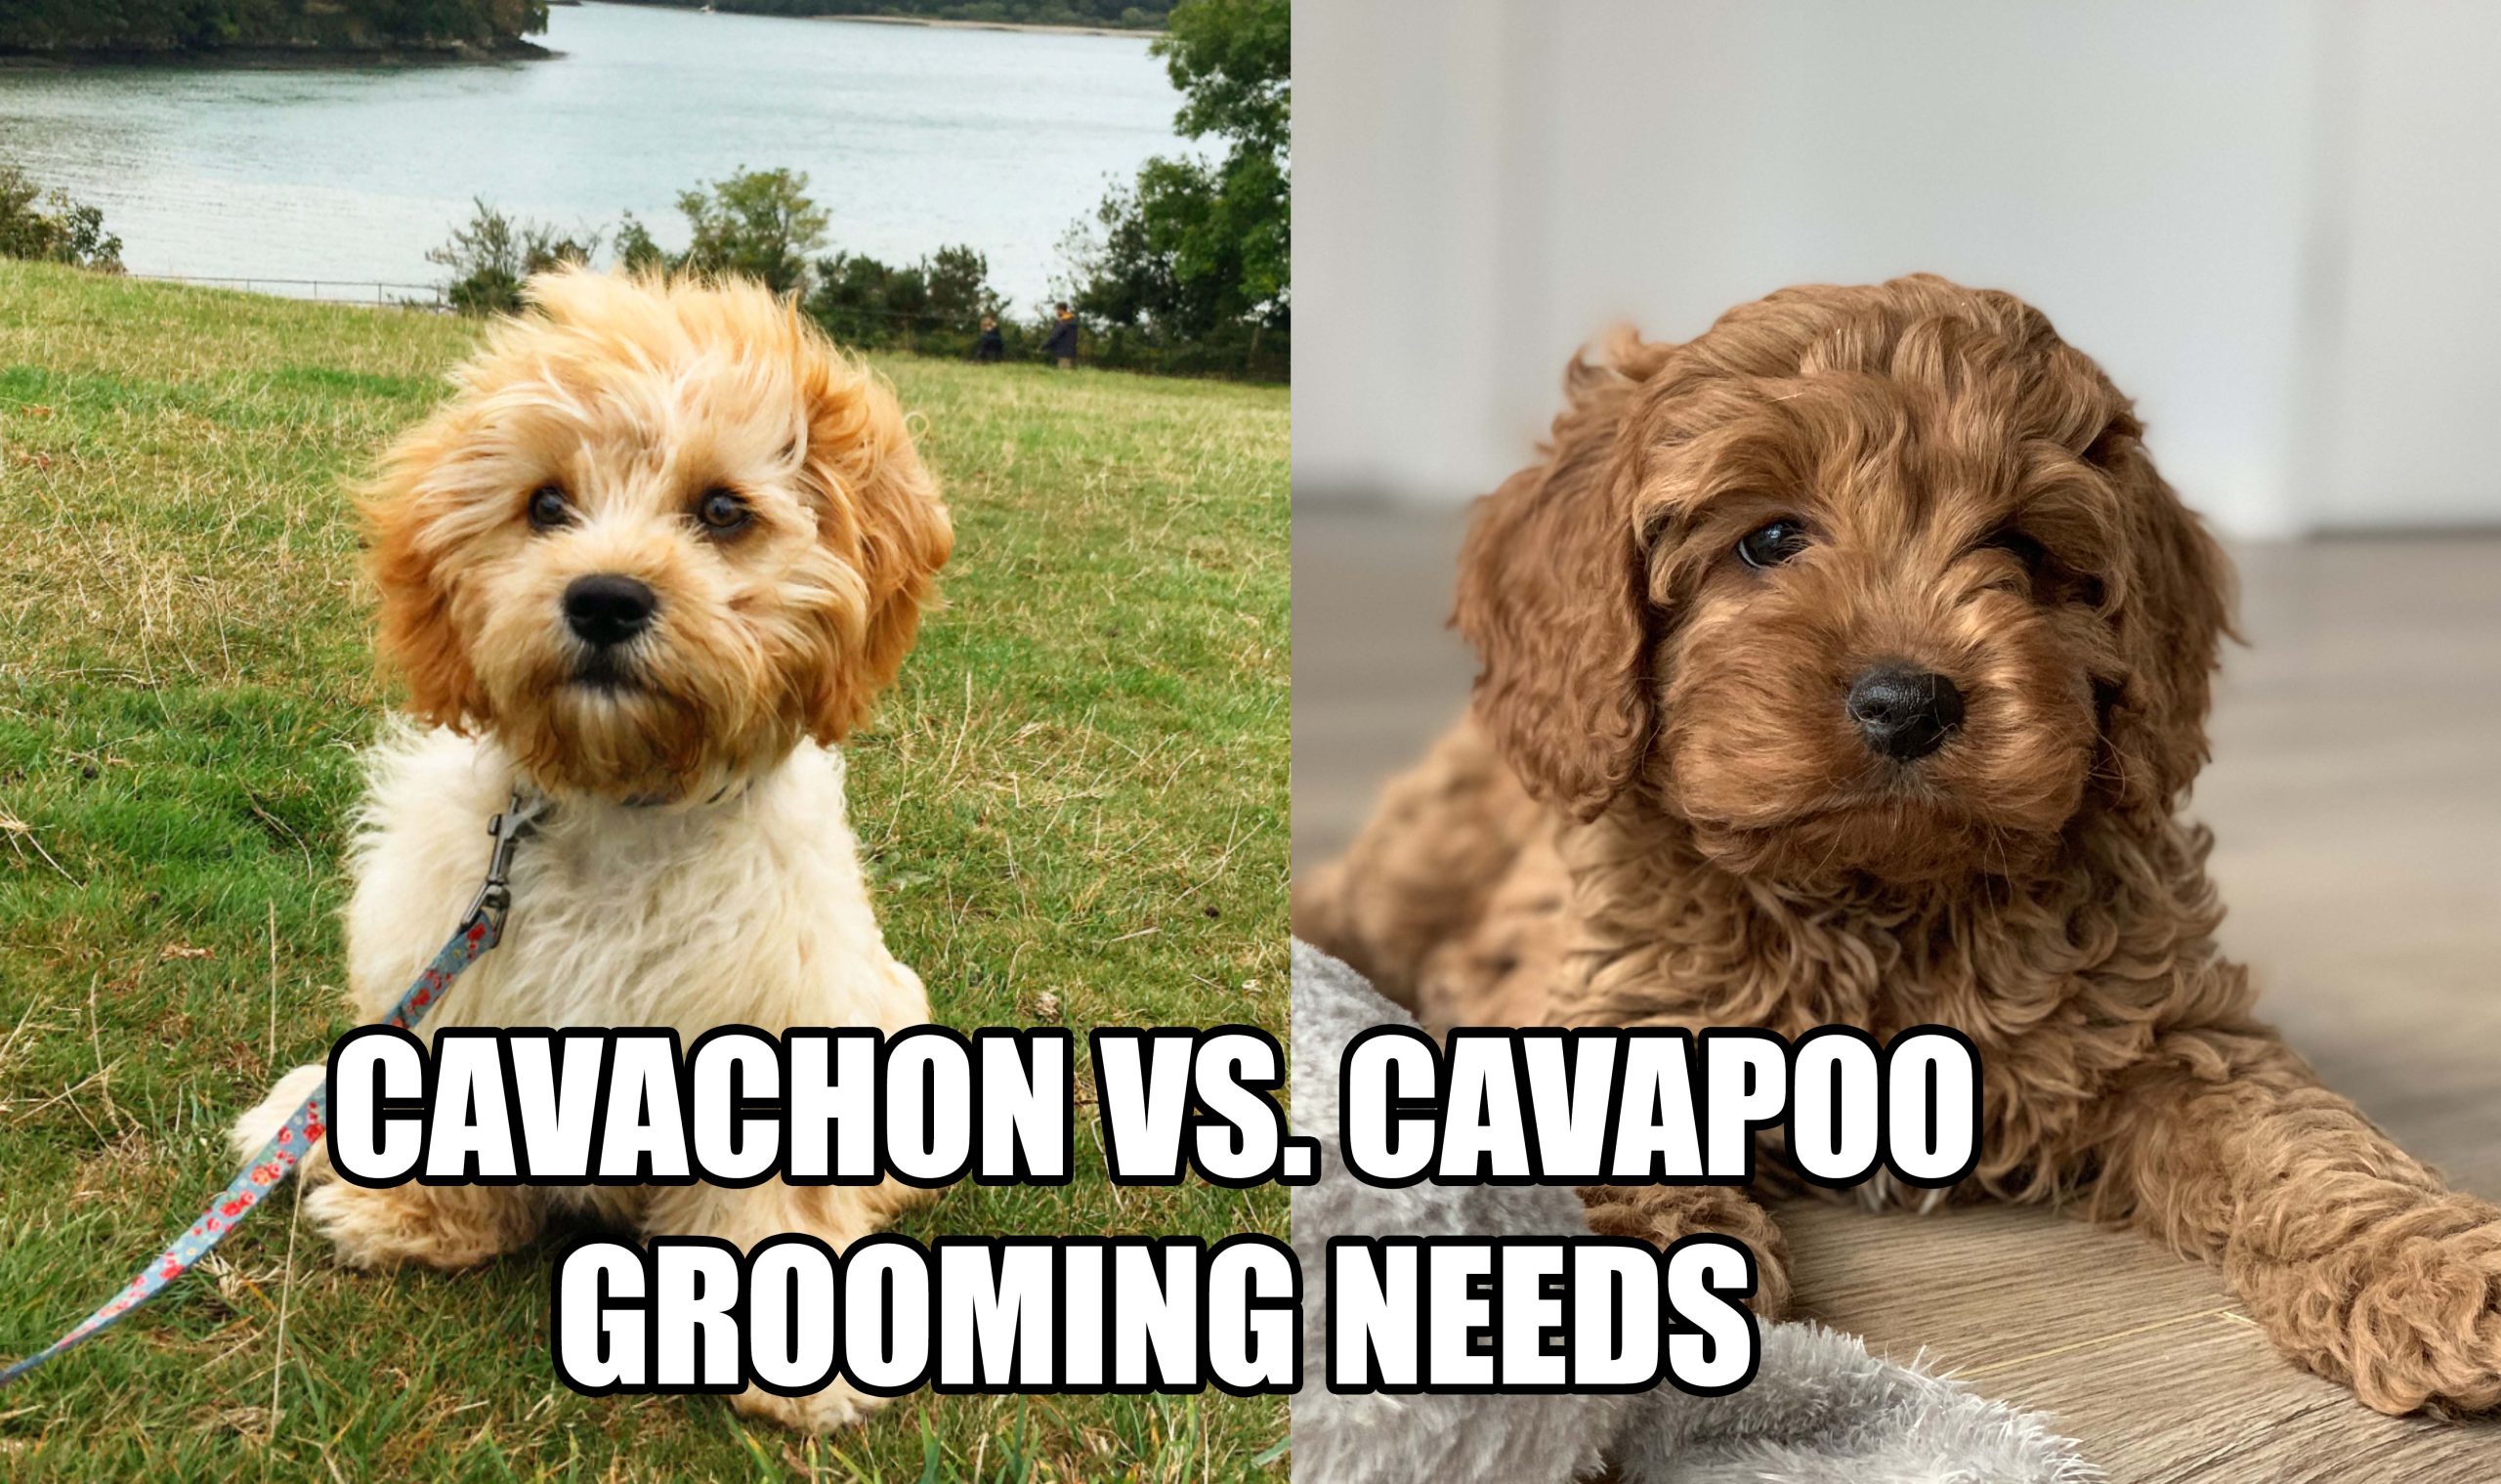 CAVACHON VS CAVAPOO GROOMING NEEDS